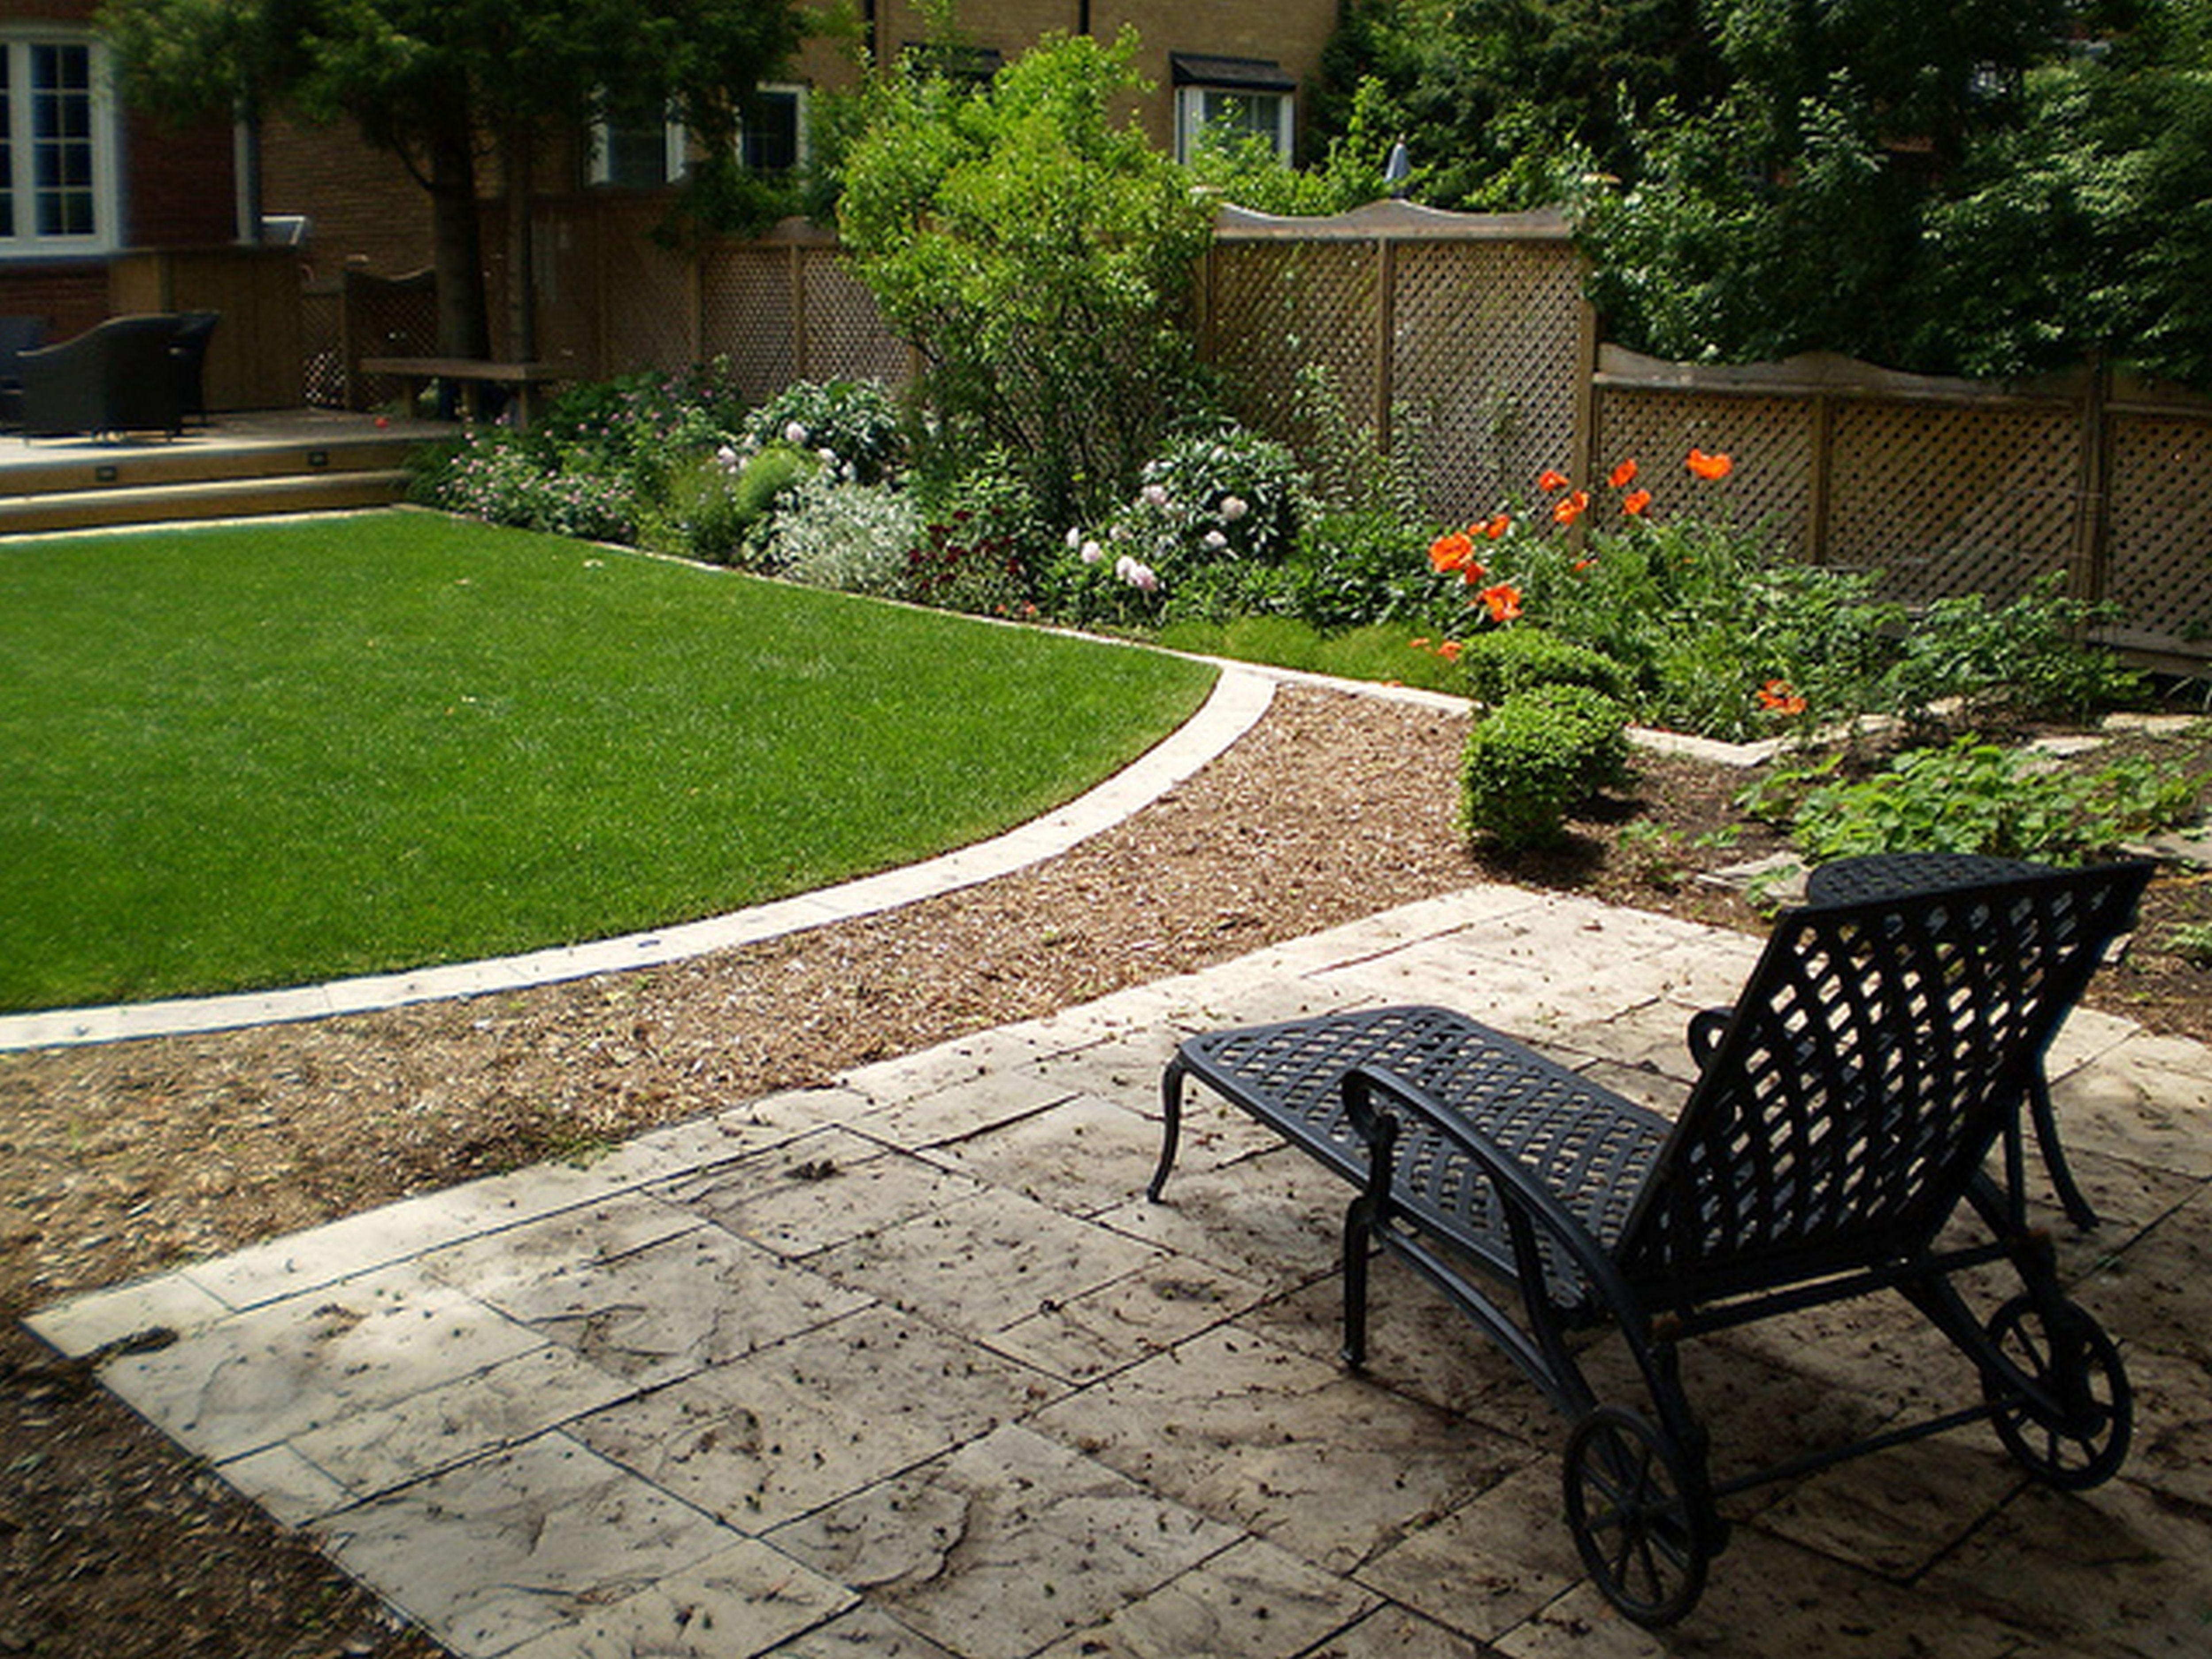 Garden design ideas for small backyards | Hawk Haven